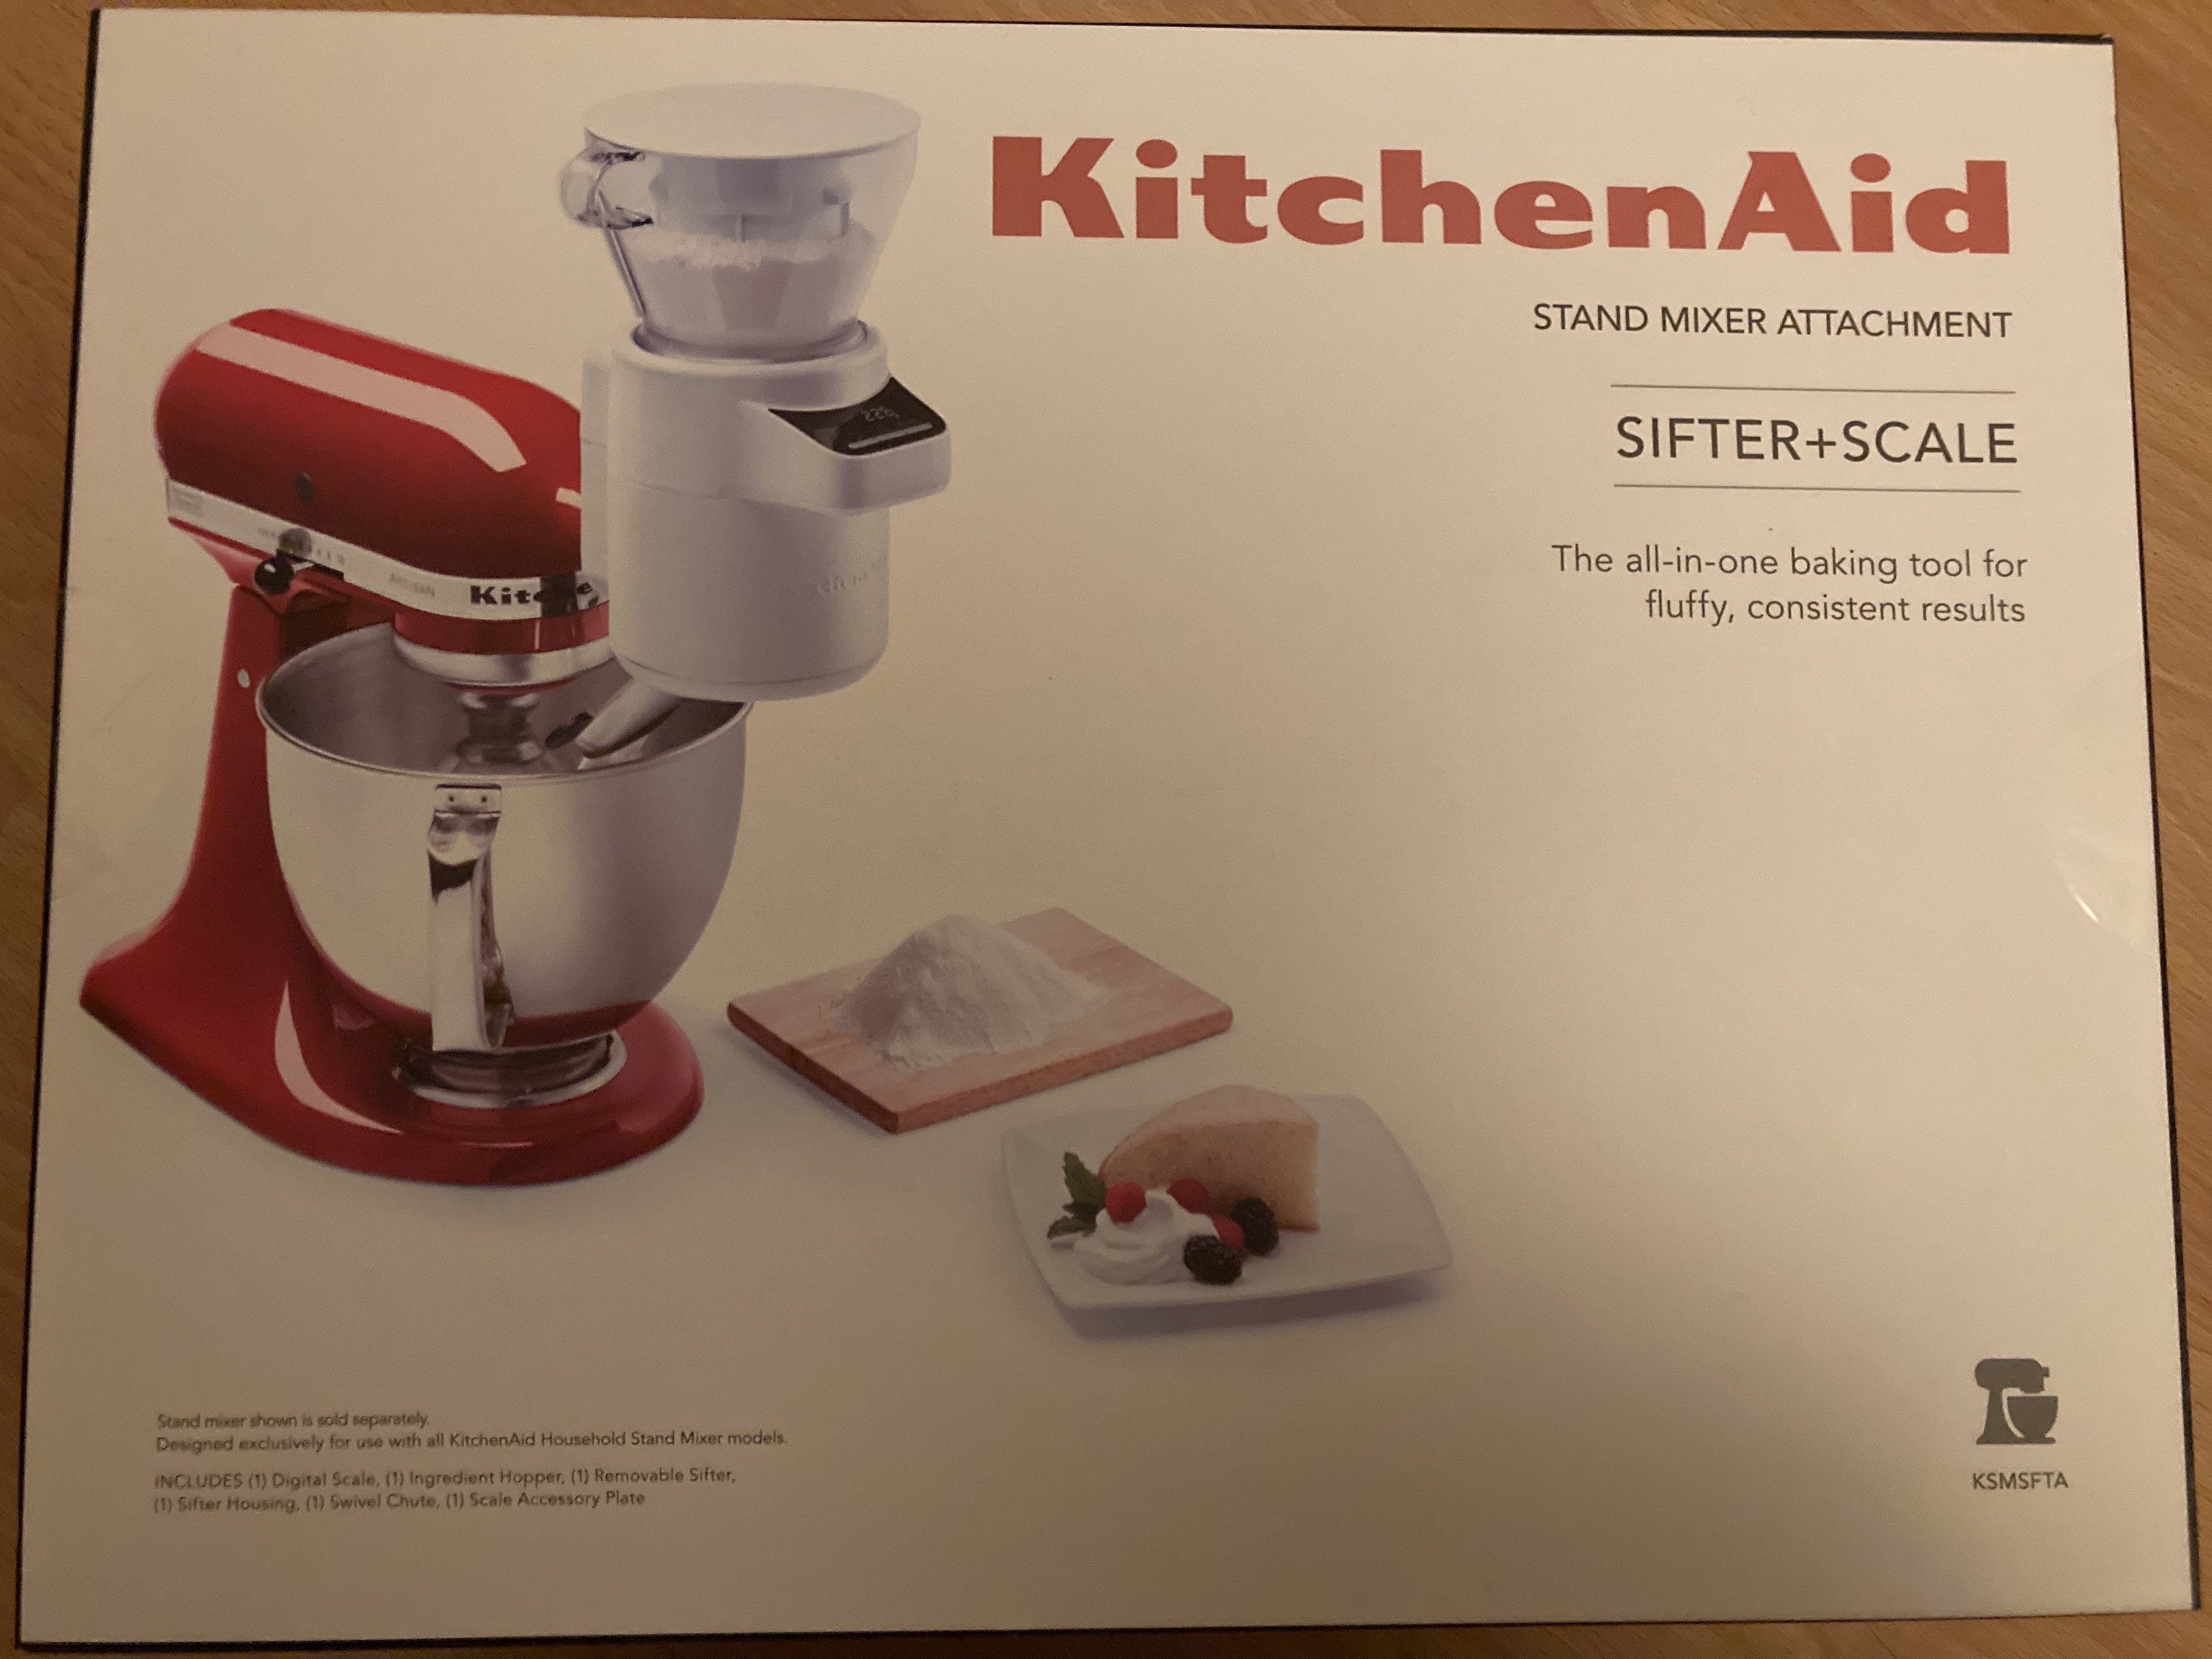 KitchenAid Sifter+Scale Attachment